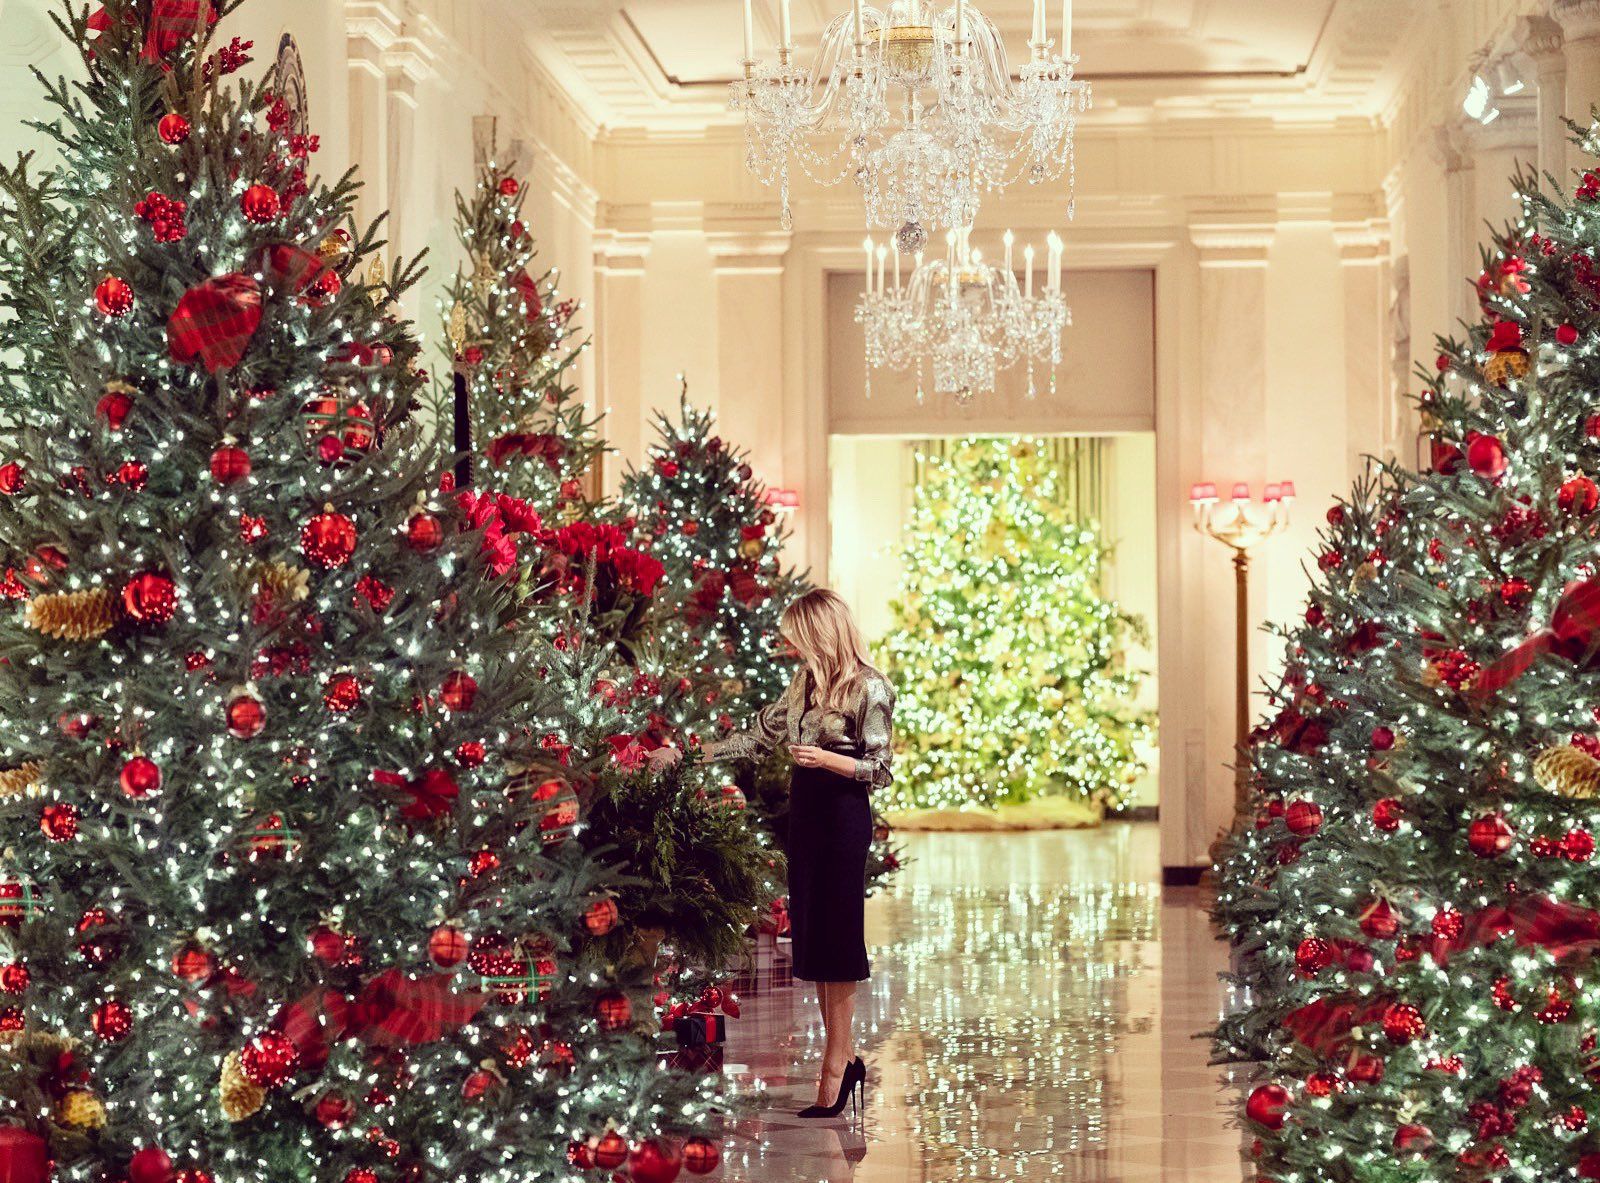 Melaina Trump “America the Beautiful” Christmas